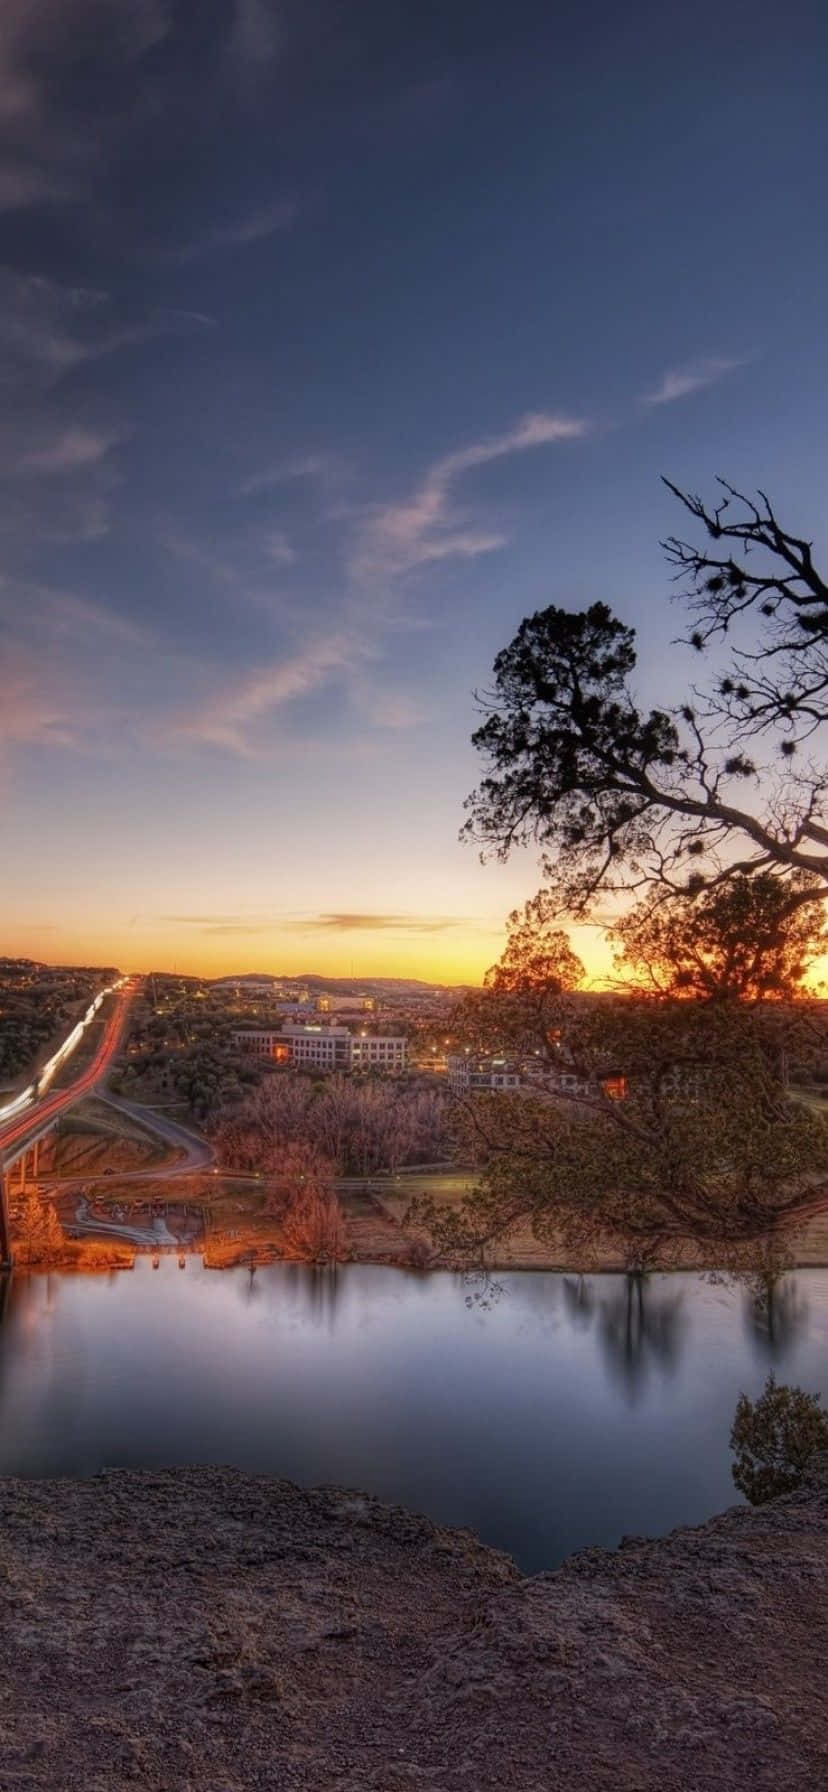 A Bridge Over A River At Sunset Wallpaper